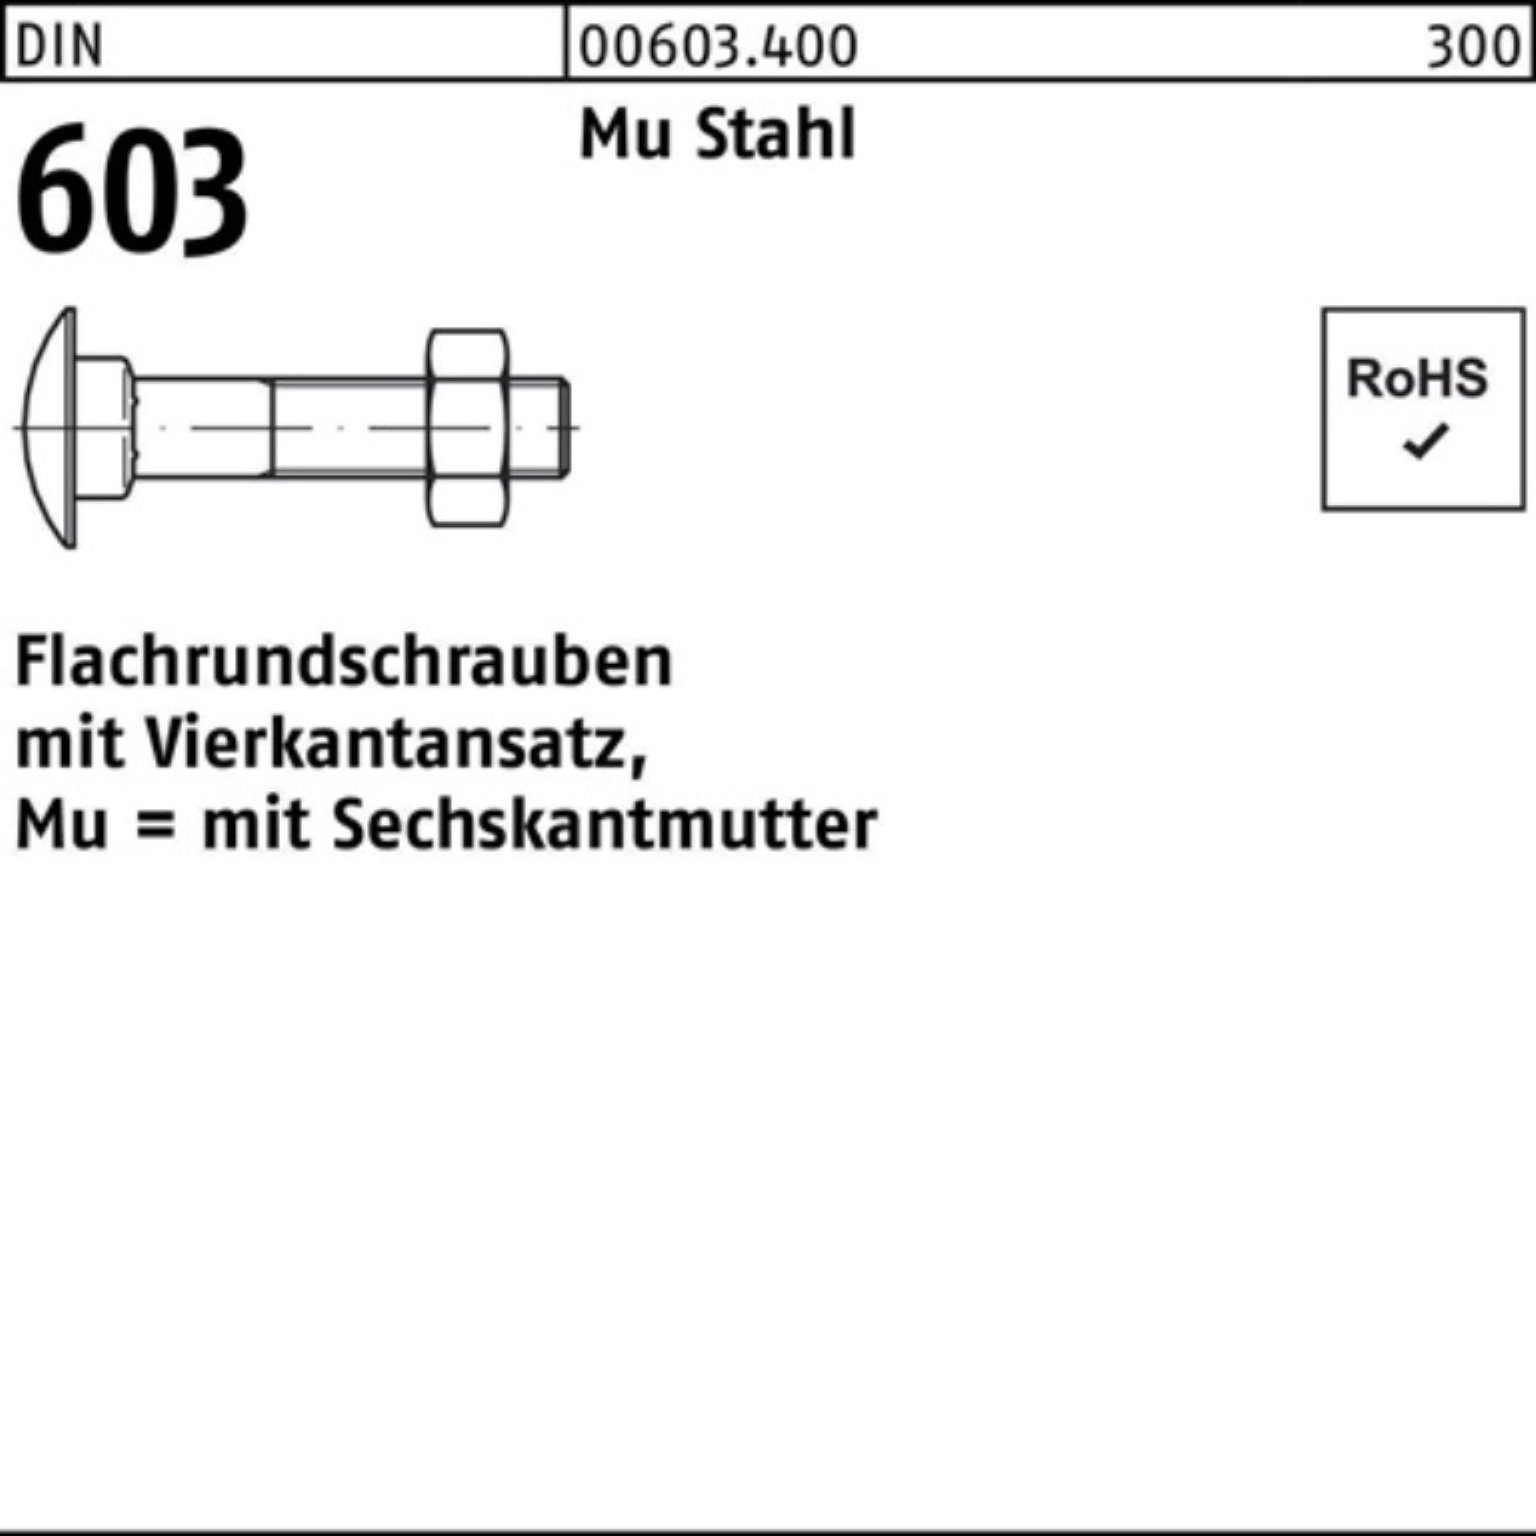 Reyher Vierkantansatz/6-ktmutter M12x320 Schraube DIN 100er Pack Flachrundschraube 603